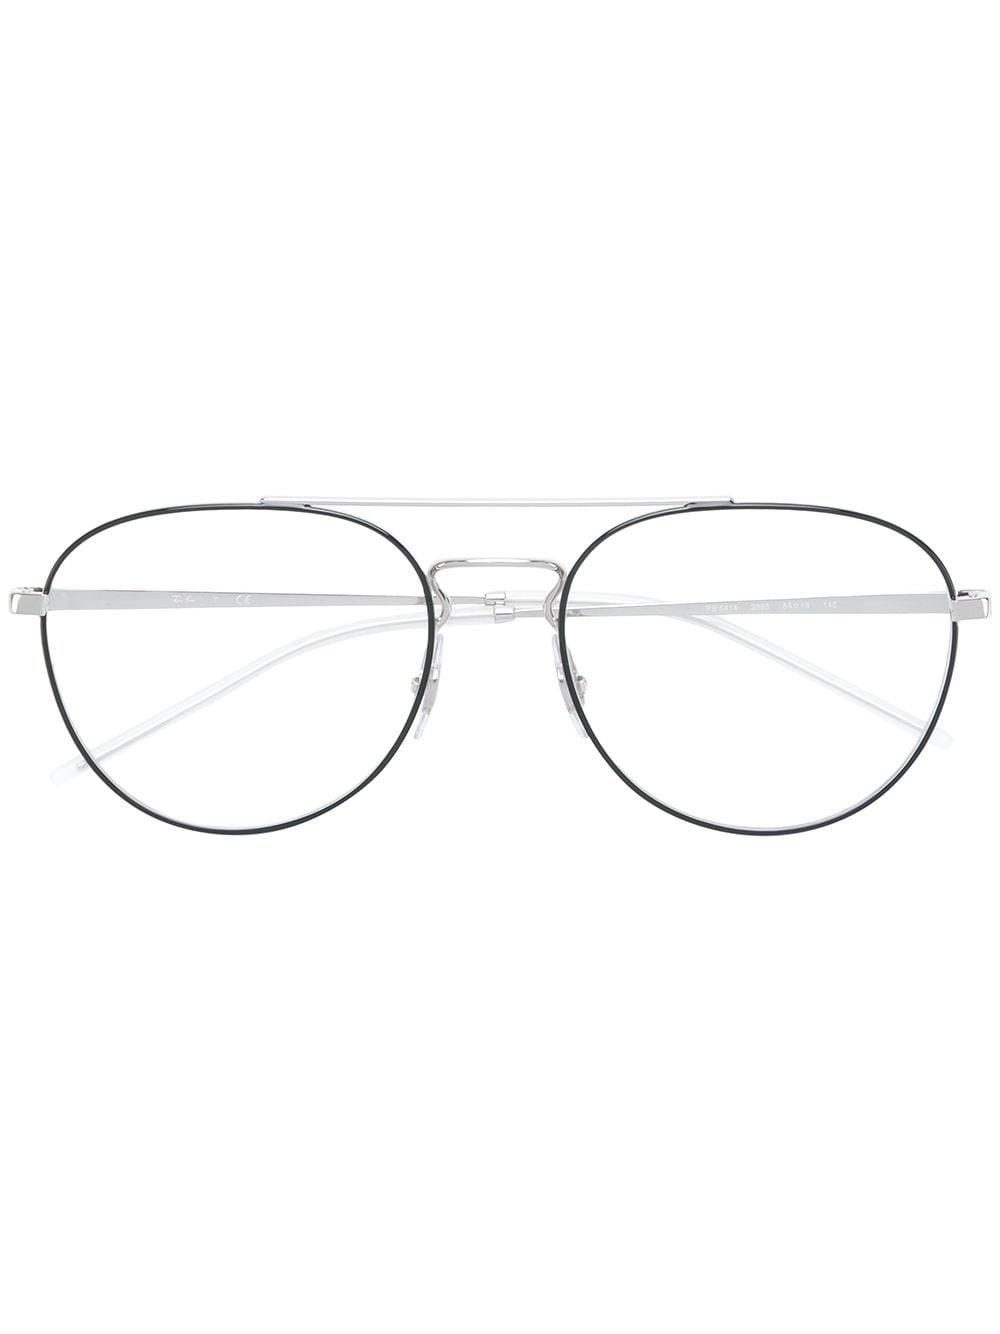 Ray-Ban aviator shaped glasses - White von Ray-Ban